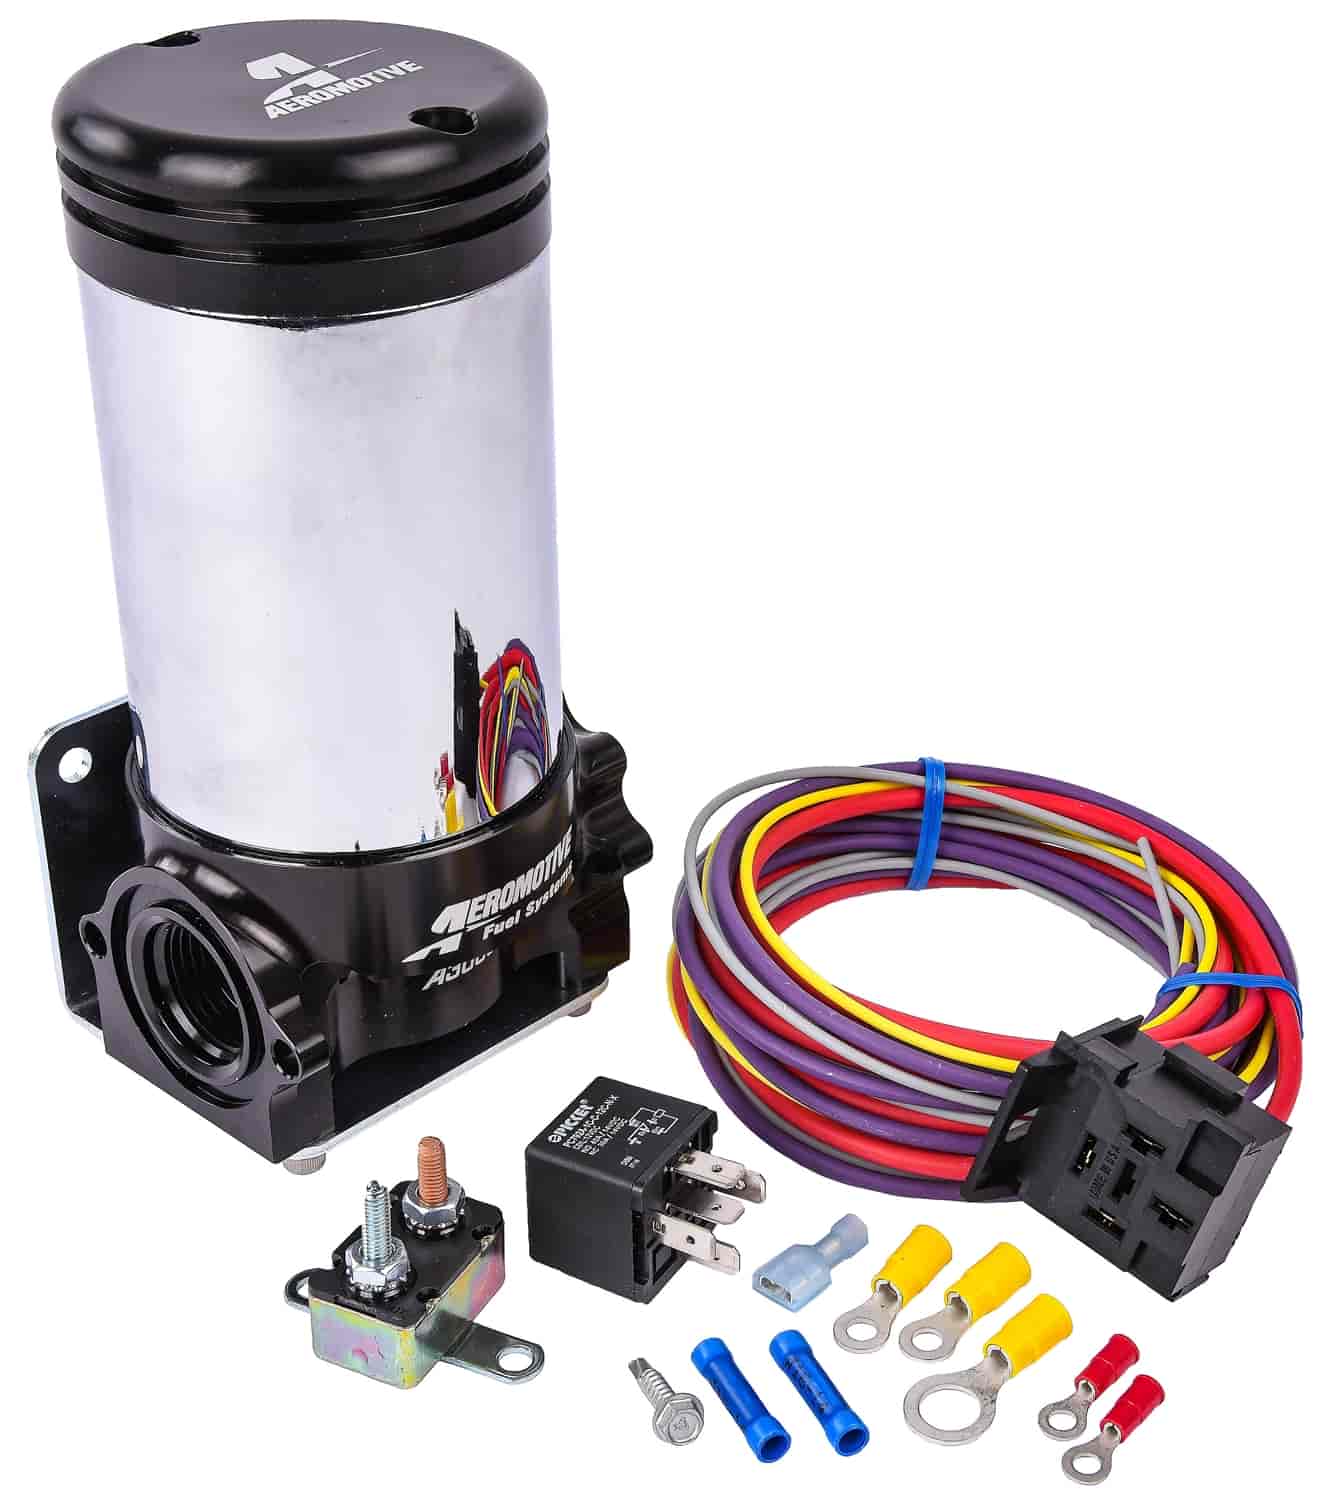 A3000 Fuel Pump Kit Includes: Aeromotive A3000 Fuel